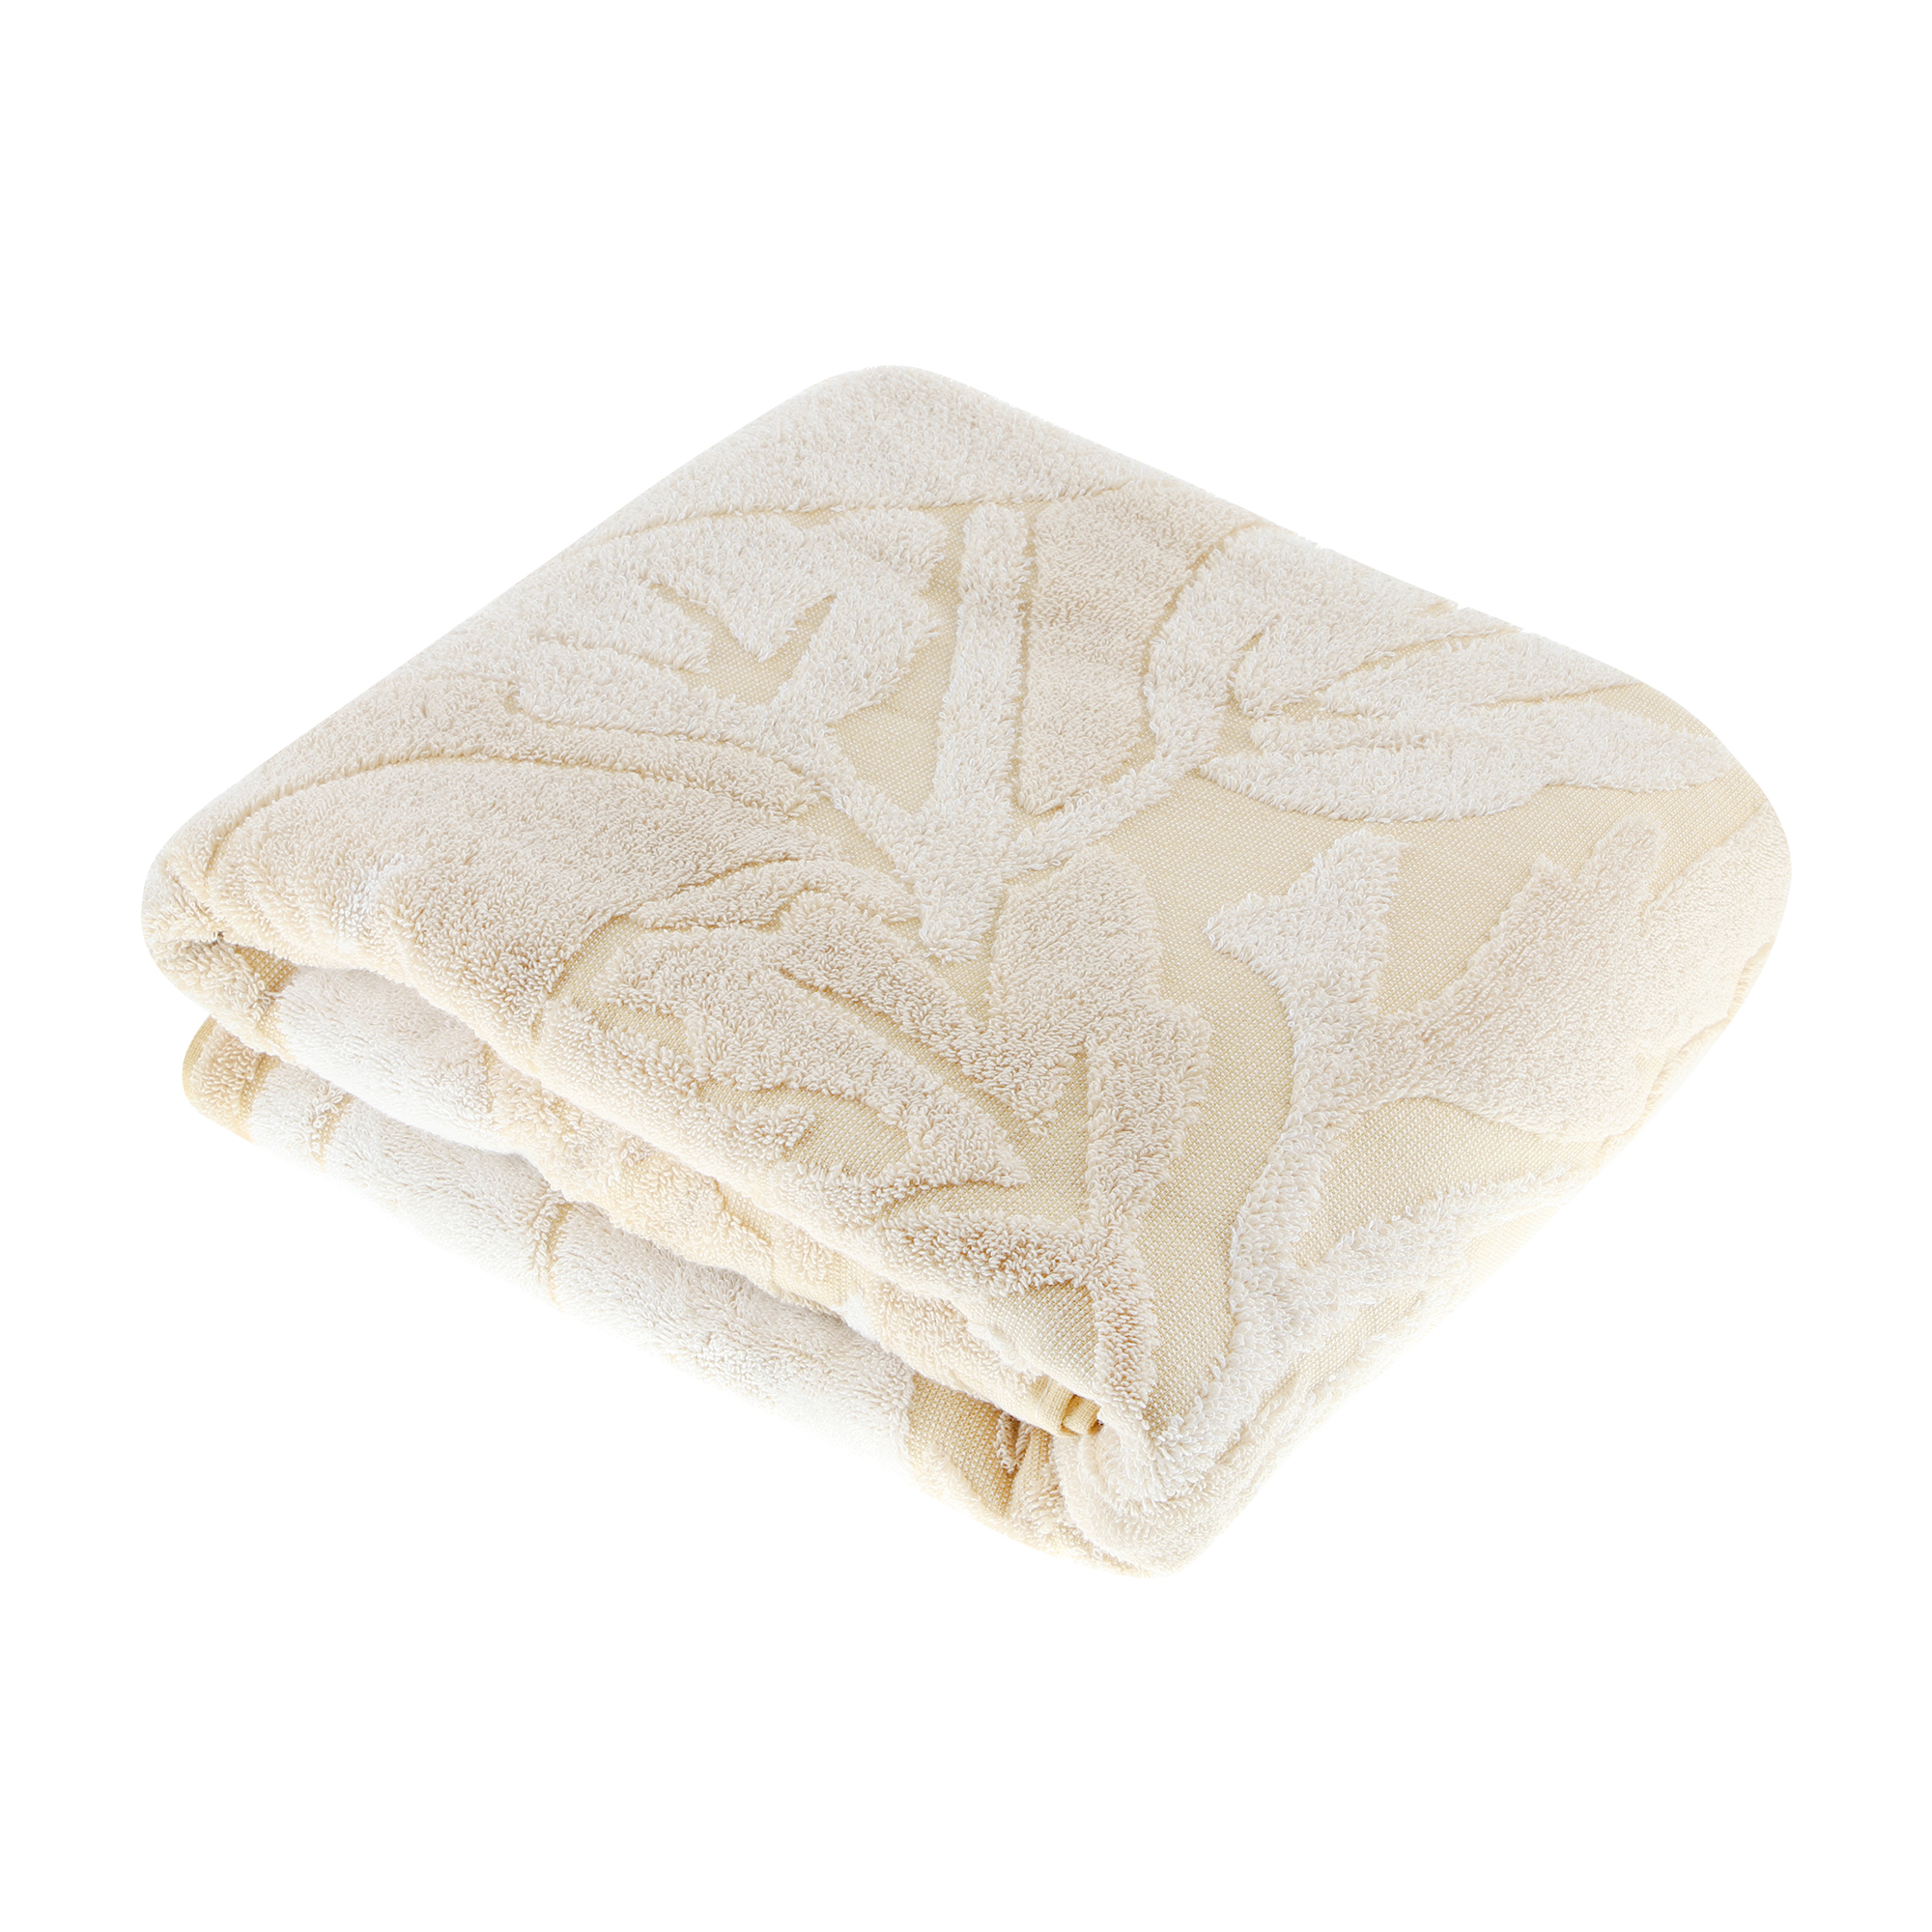 Полотенце махровое Cleanelly Форэста 100х150 бело-горчичное полотенце махровое cleanelly пиоппо горчица 100х150 см